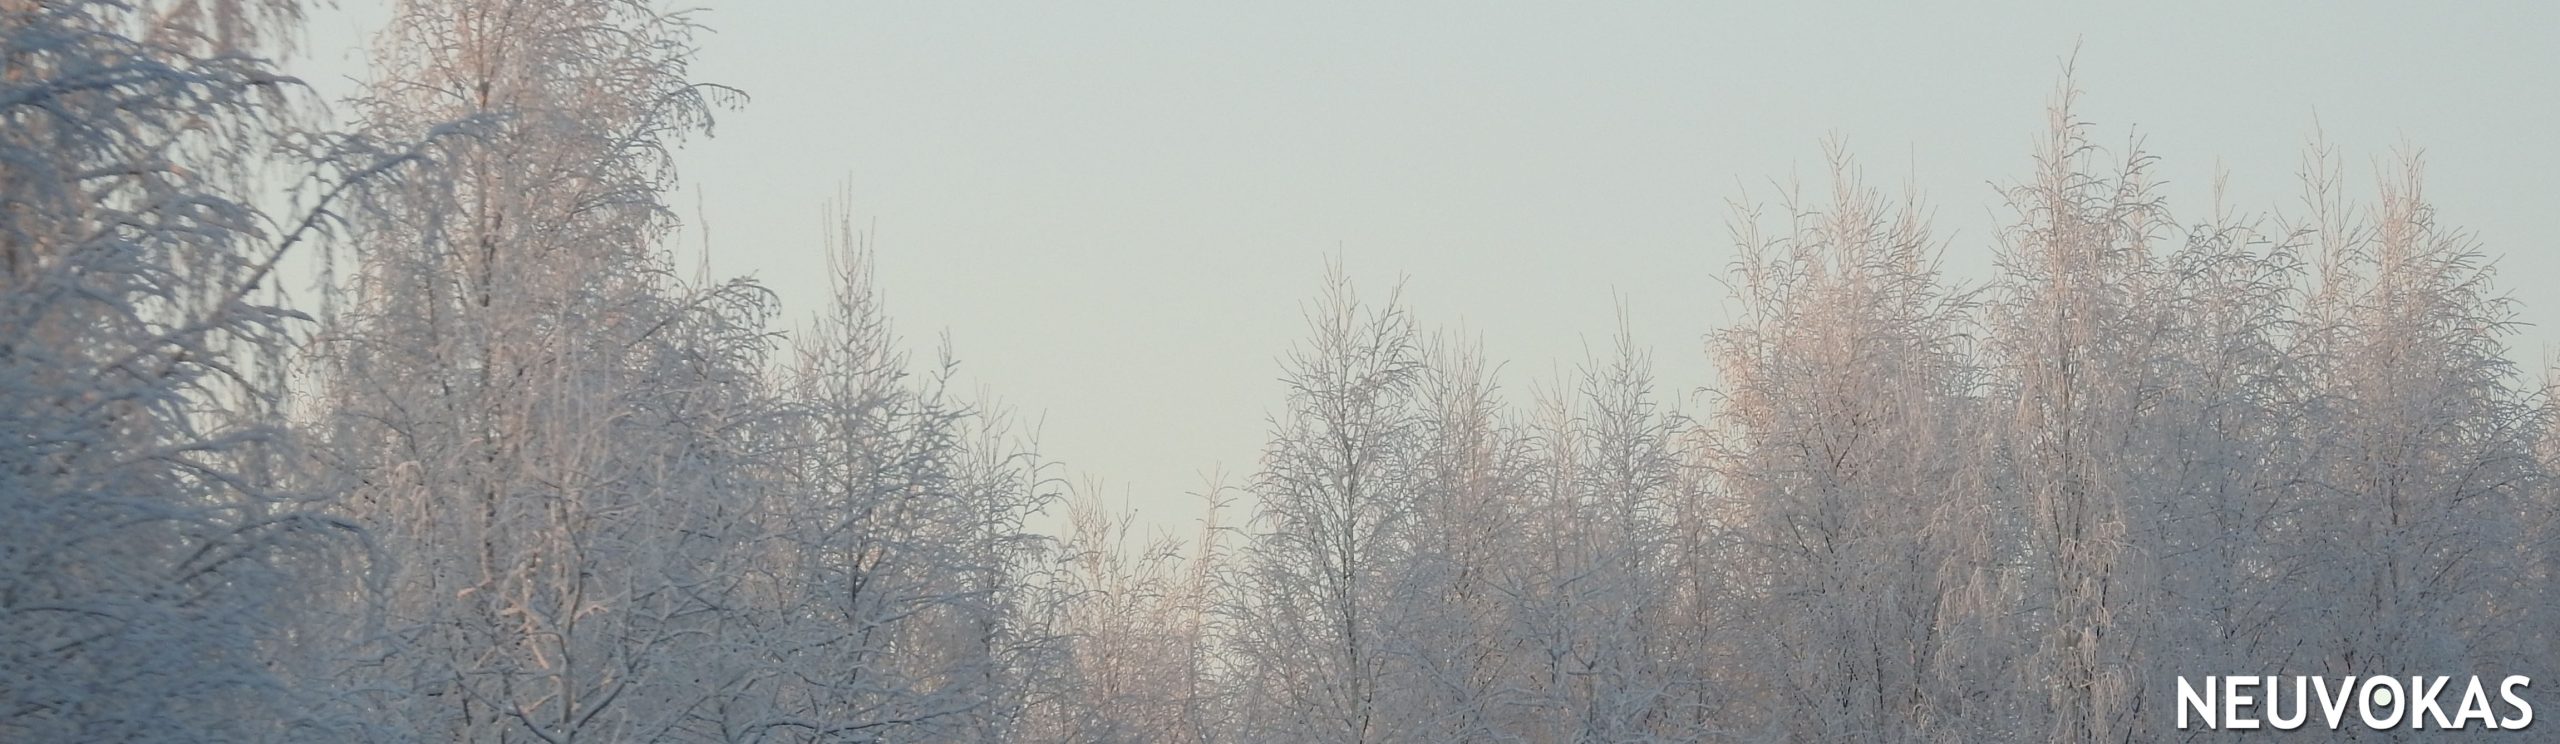 kuvituskuva: lumiset puut